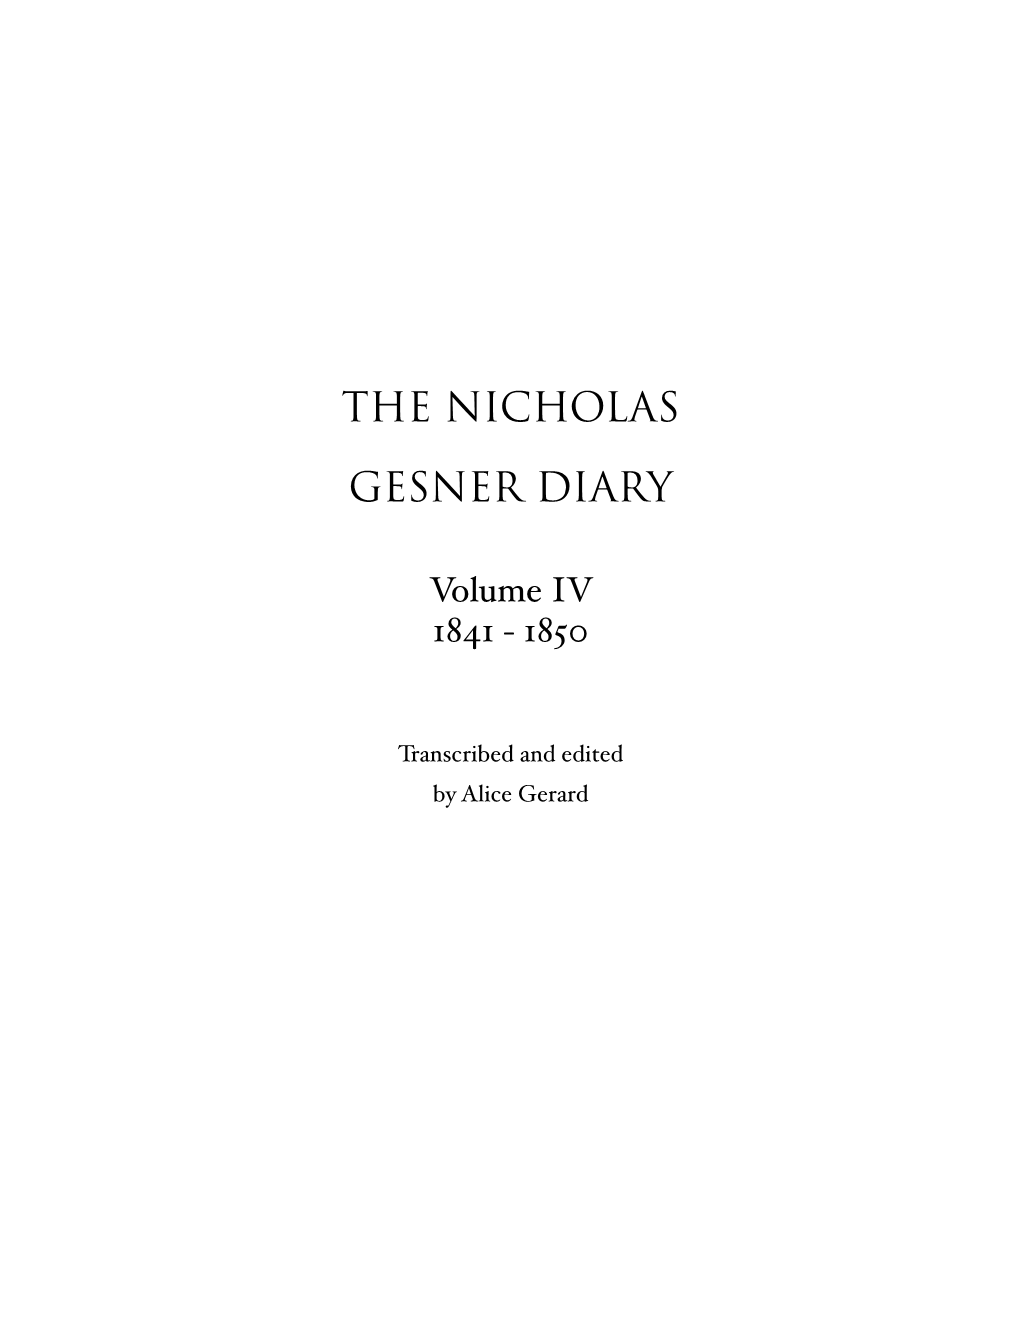 The Nicholas Gesner Diary, Volume IV